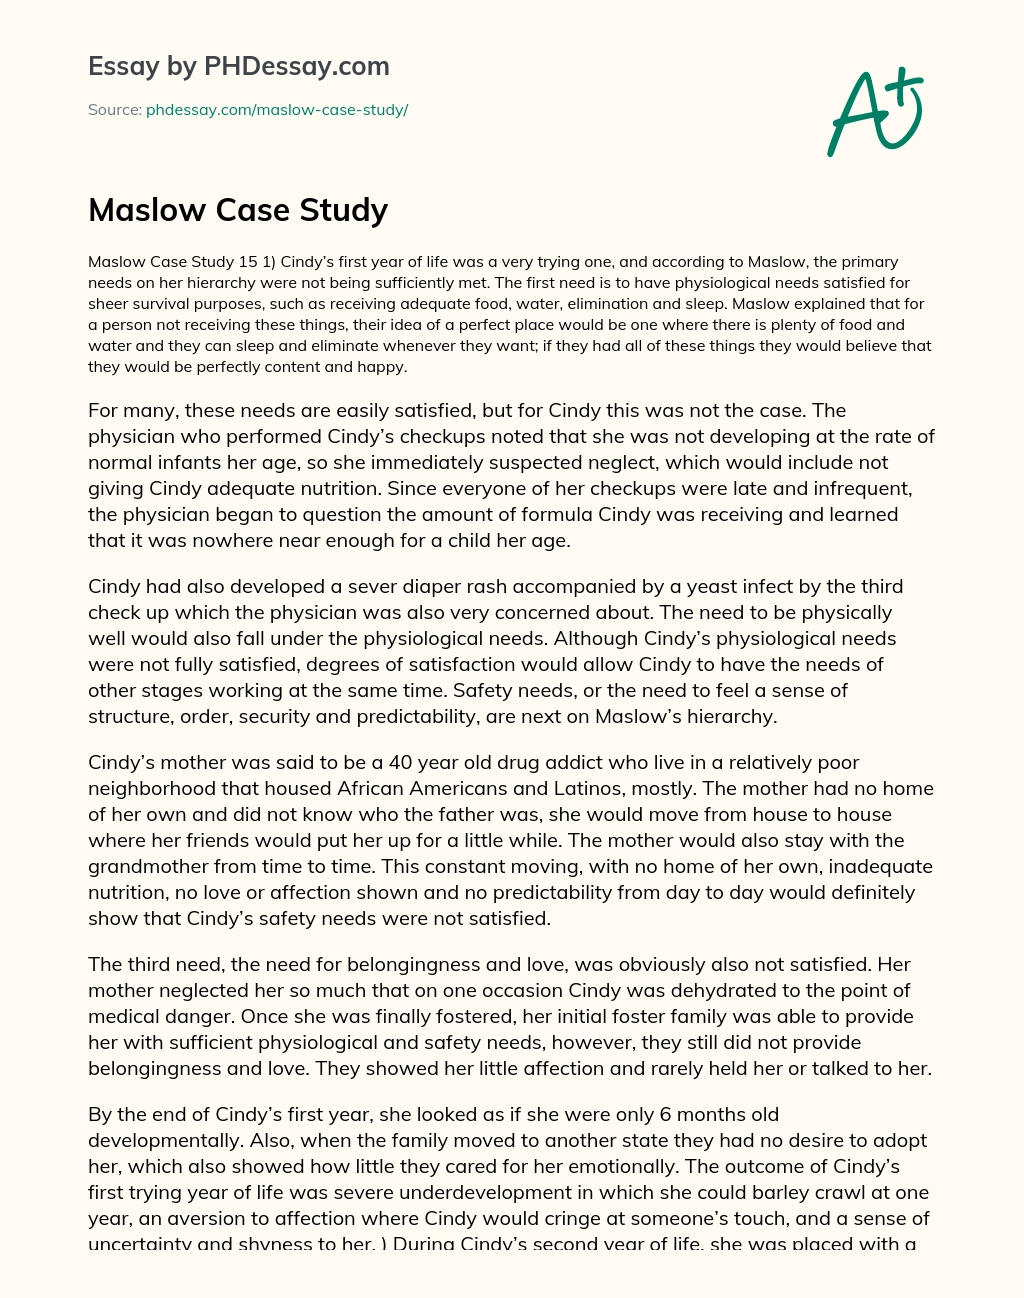 Maslow Case Study essay